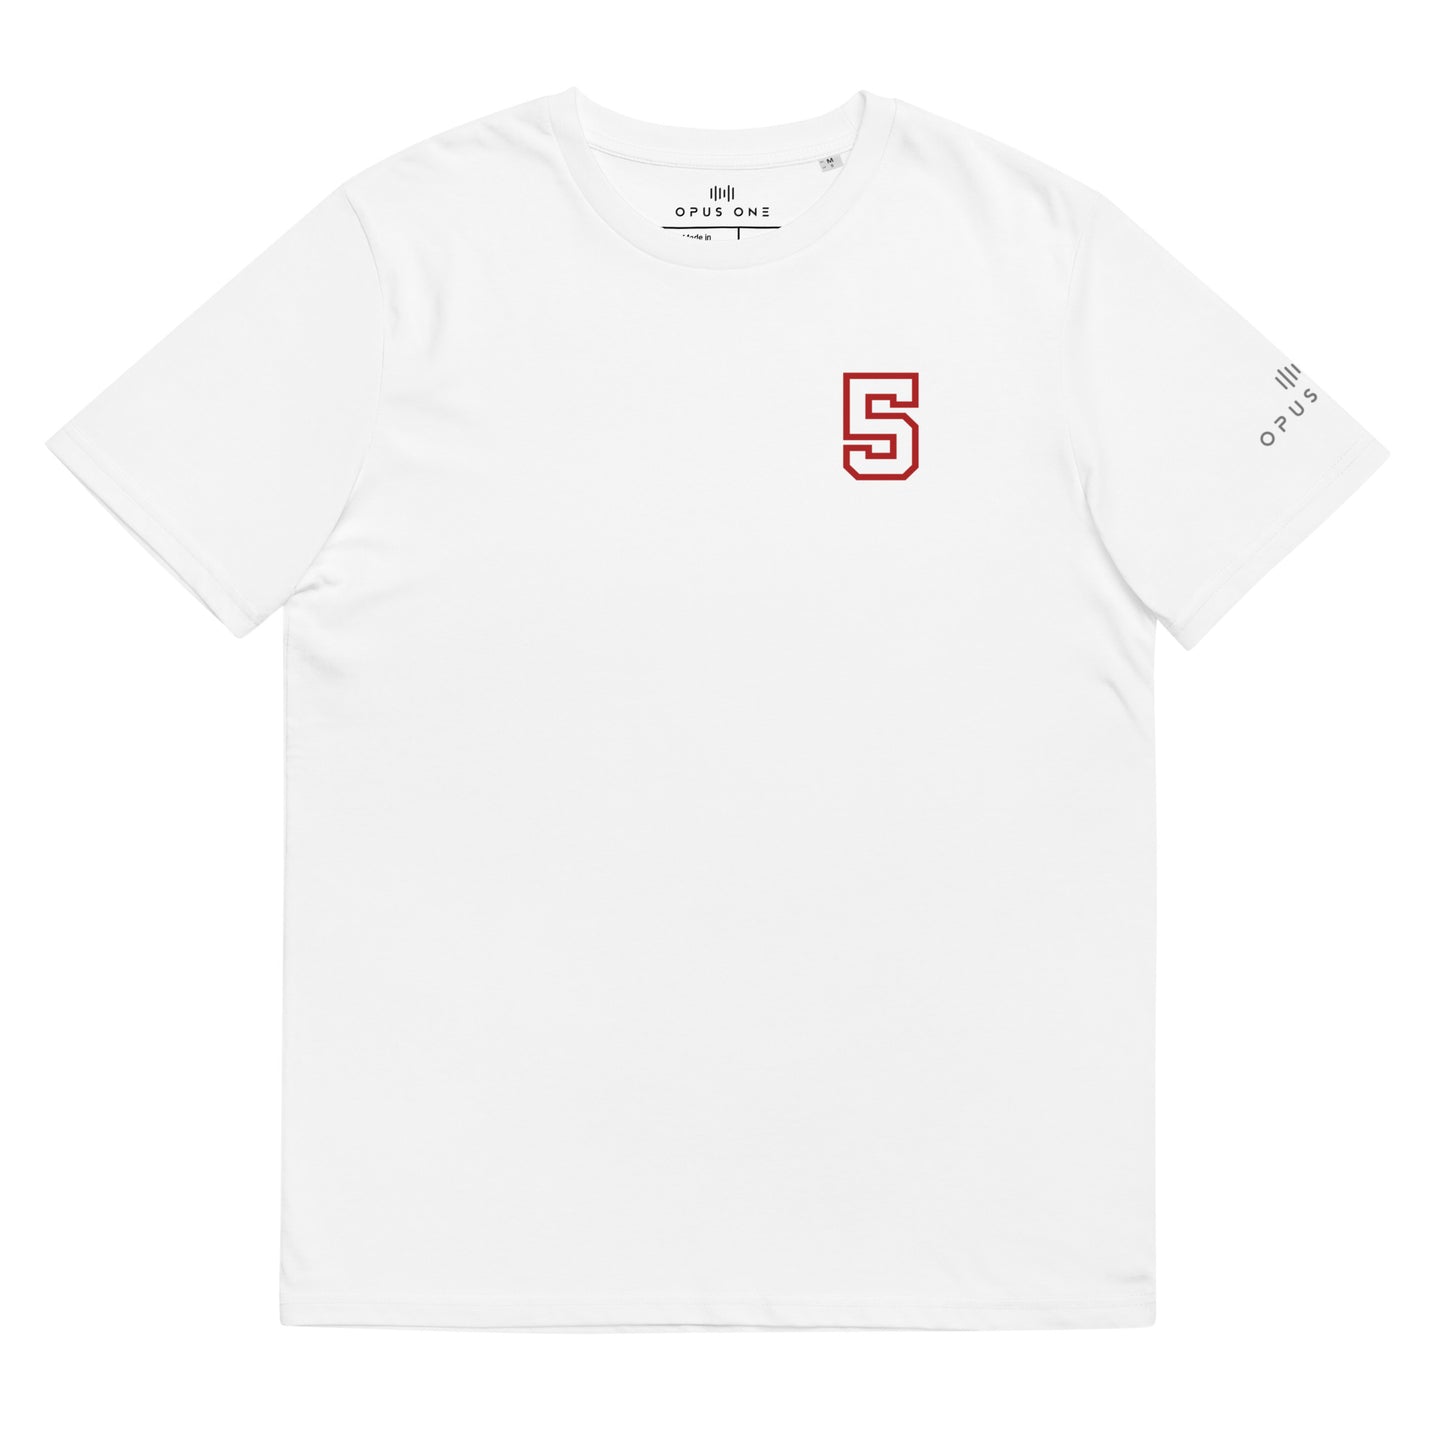 Signature Series (5ive Alive v2) Unisex organic cotton t-shirt MAIN BACK PRINT